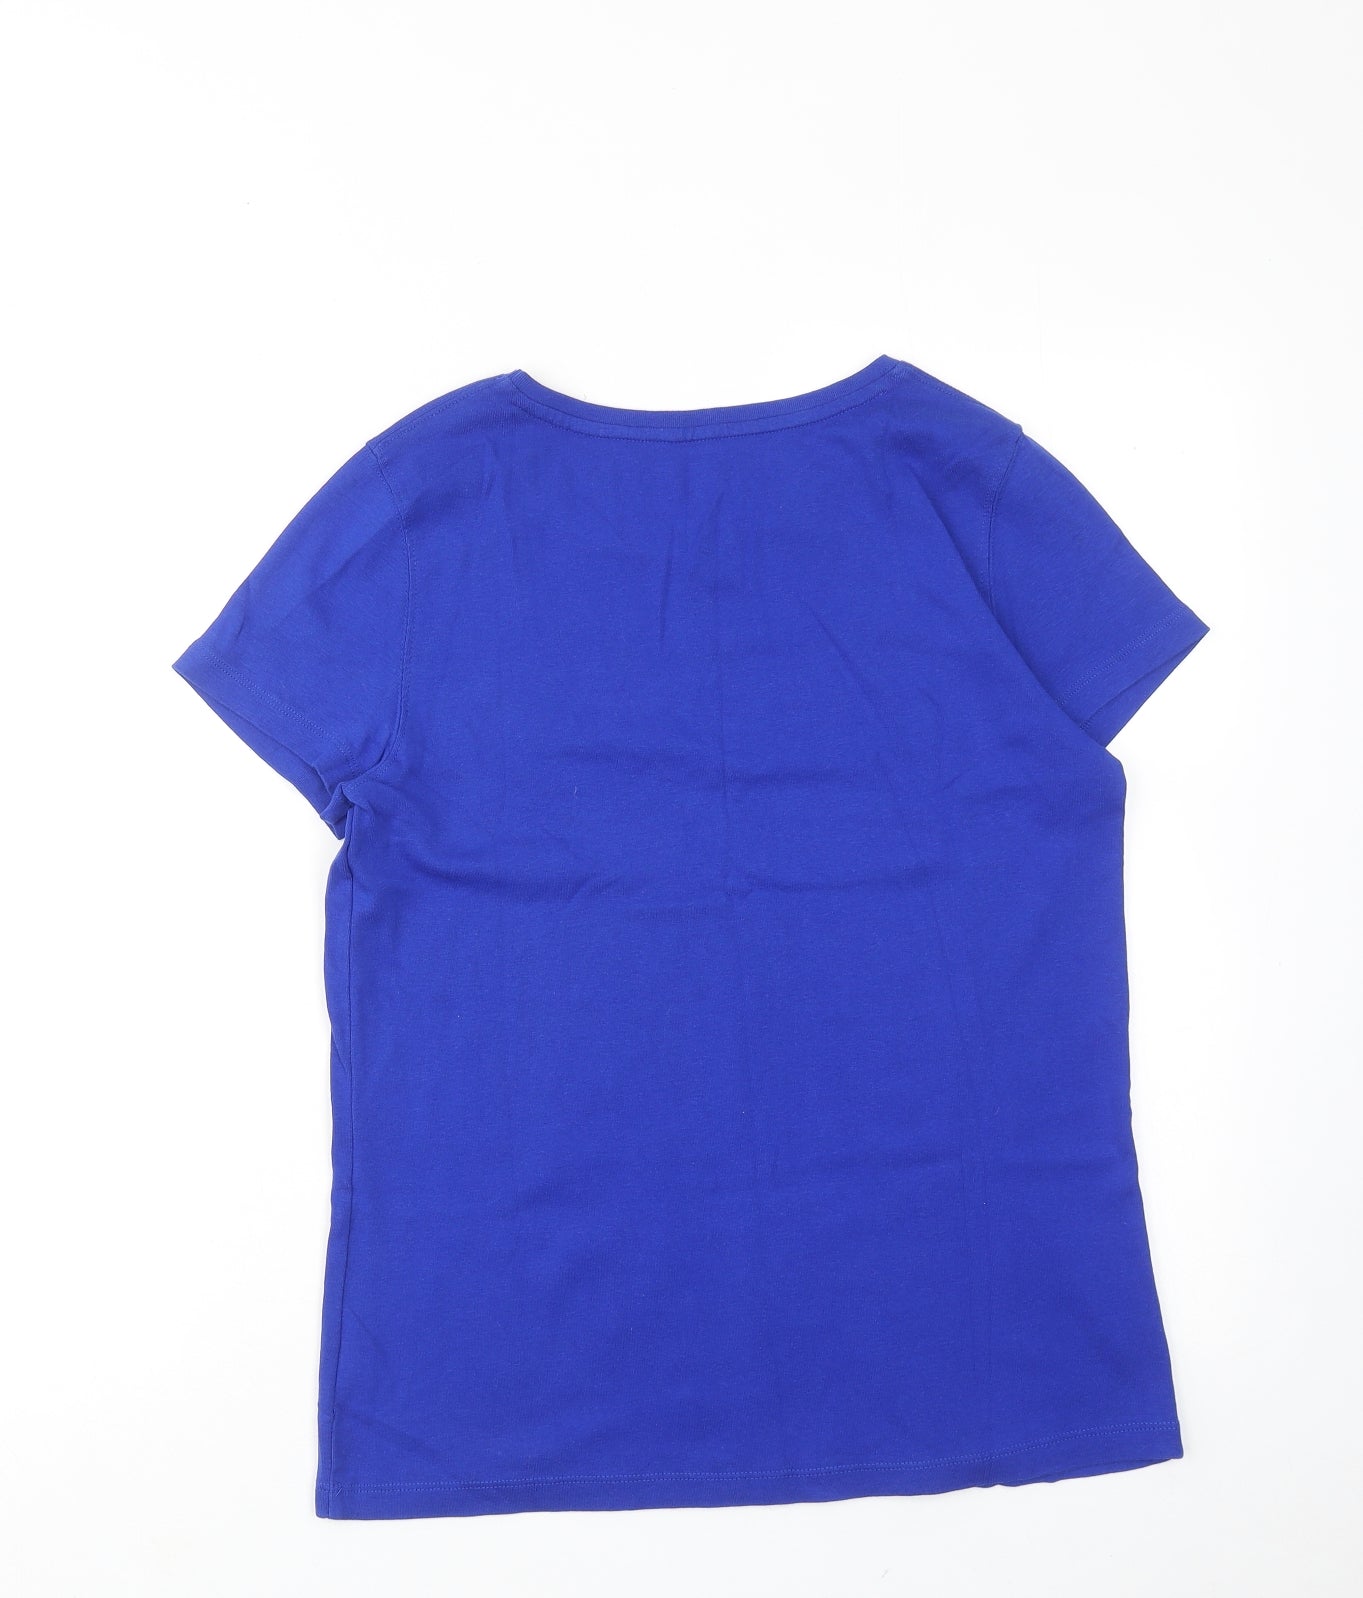 St. John's Bay Womens Blue Cotton Basic T-Shirt Size M Boat Neck